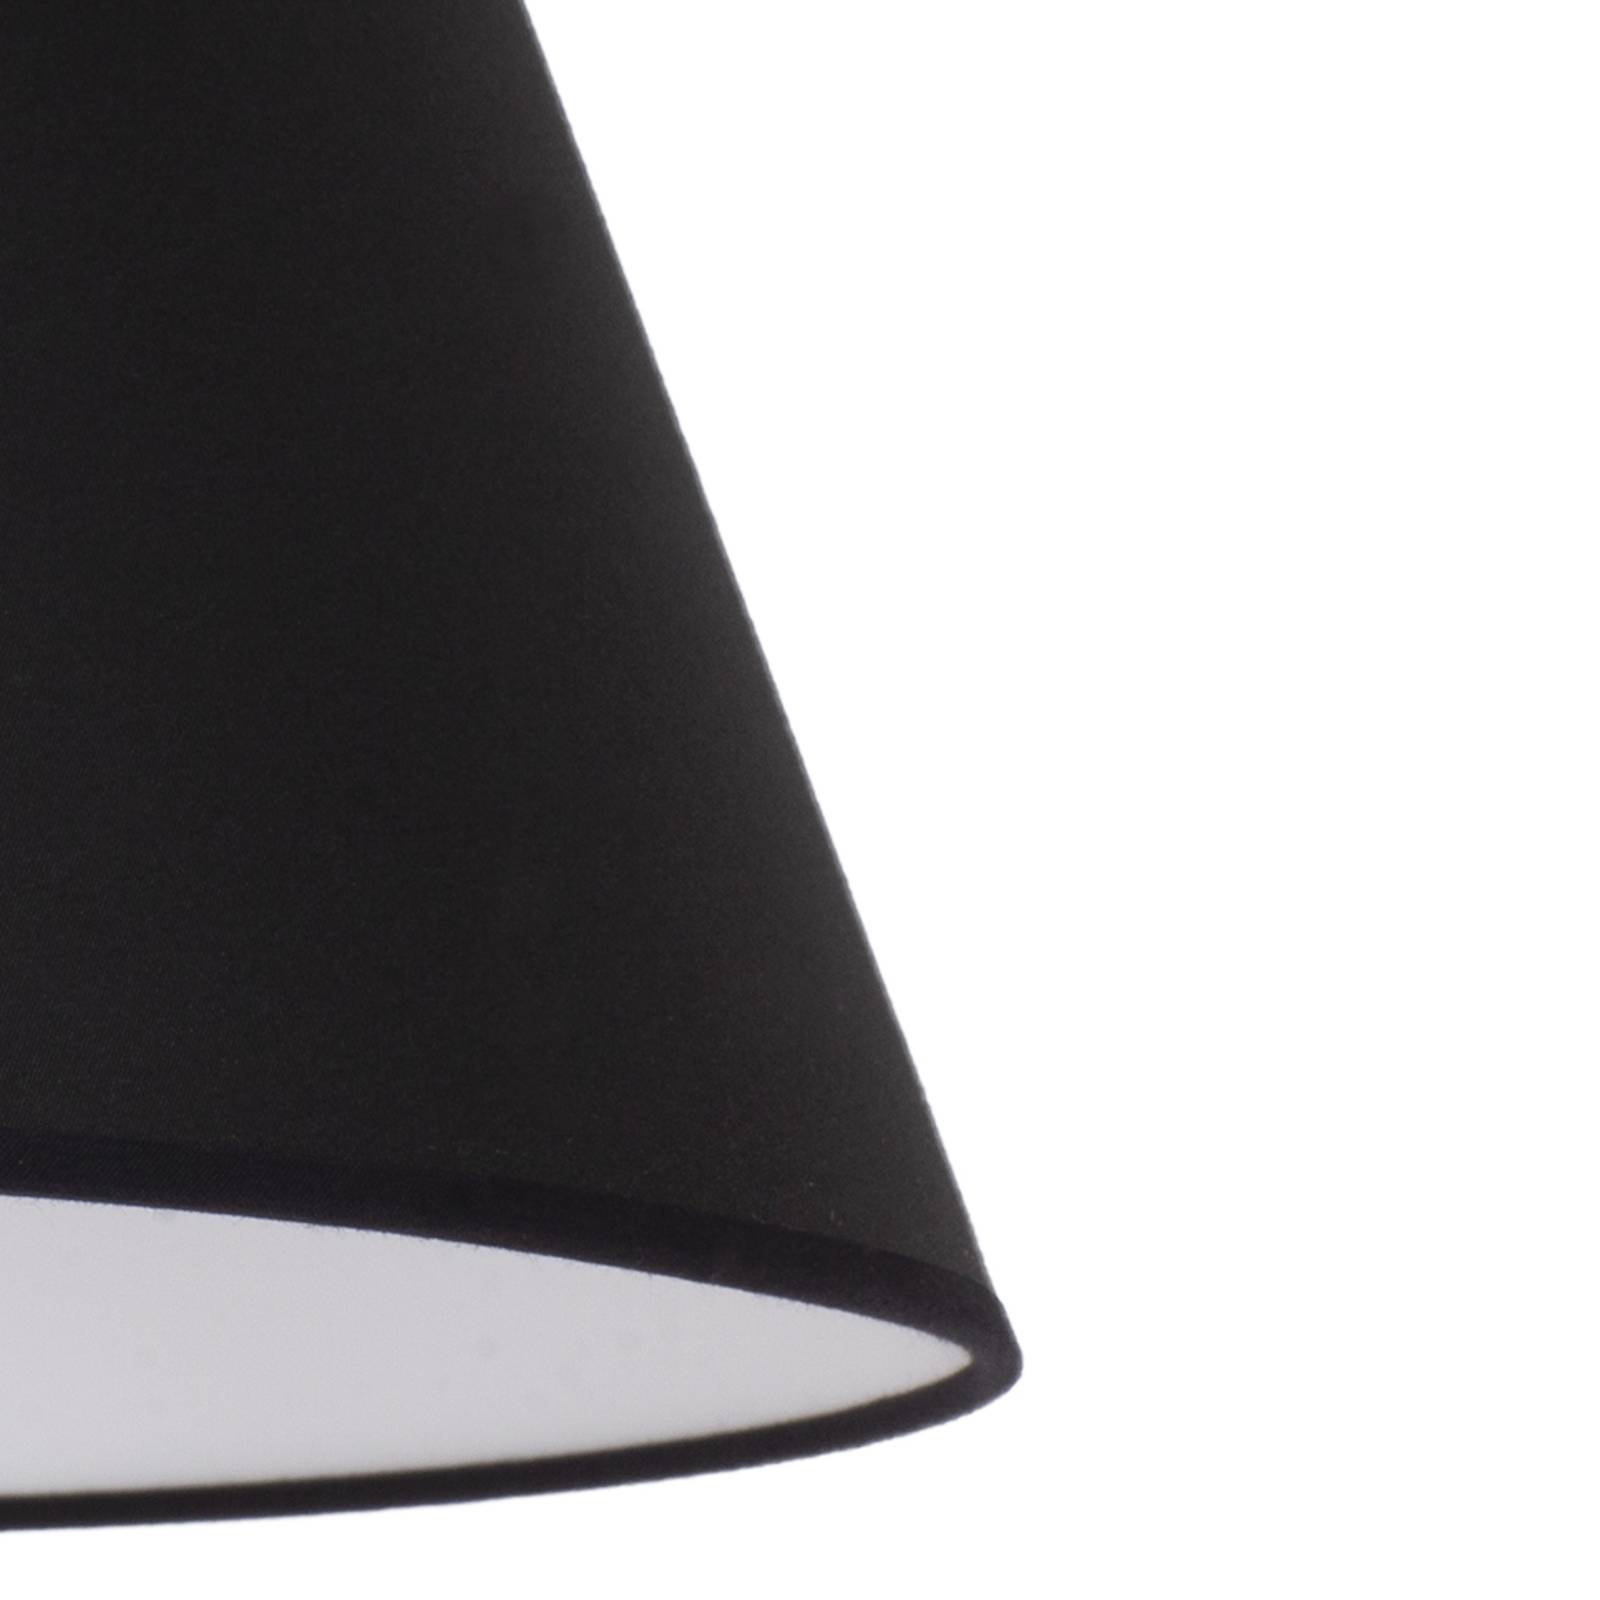 Sofia lámpaernyő 31 cm magas, fekete/fehér